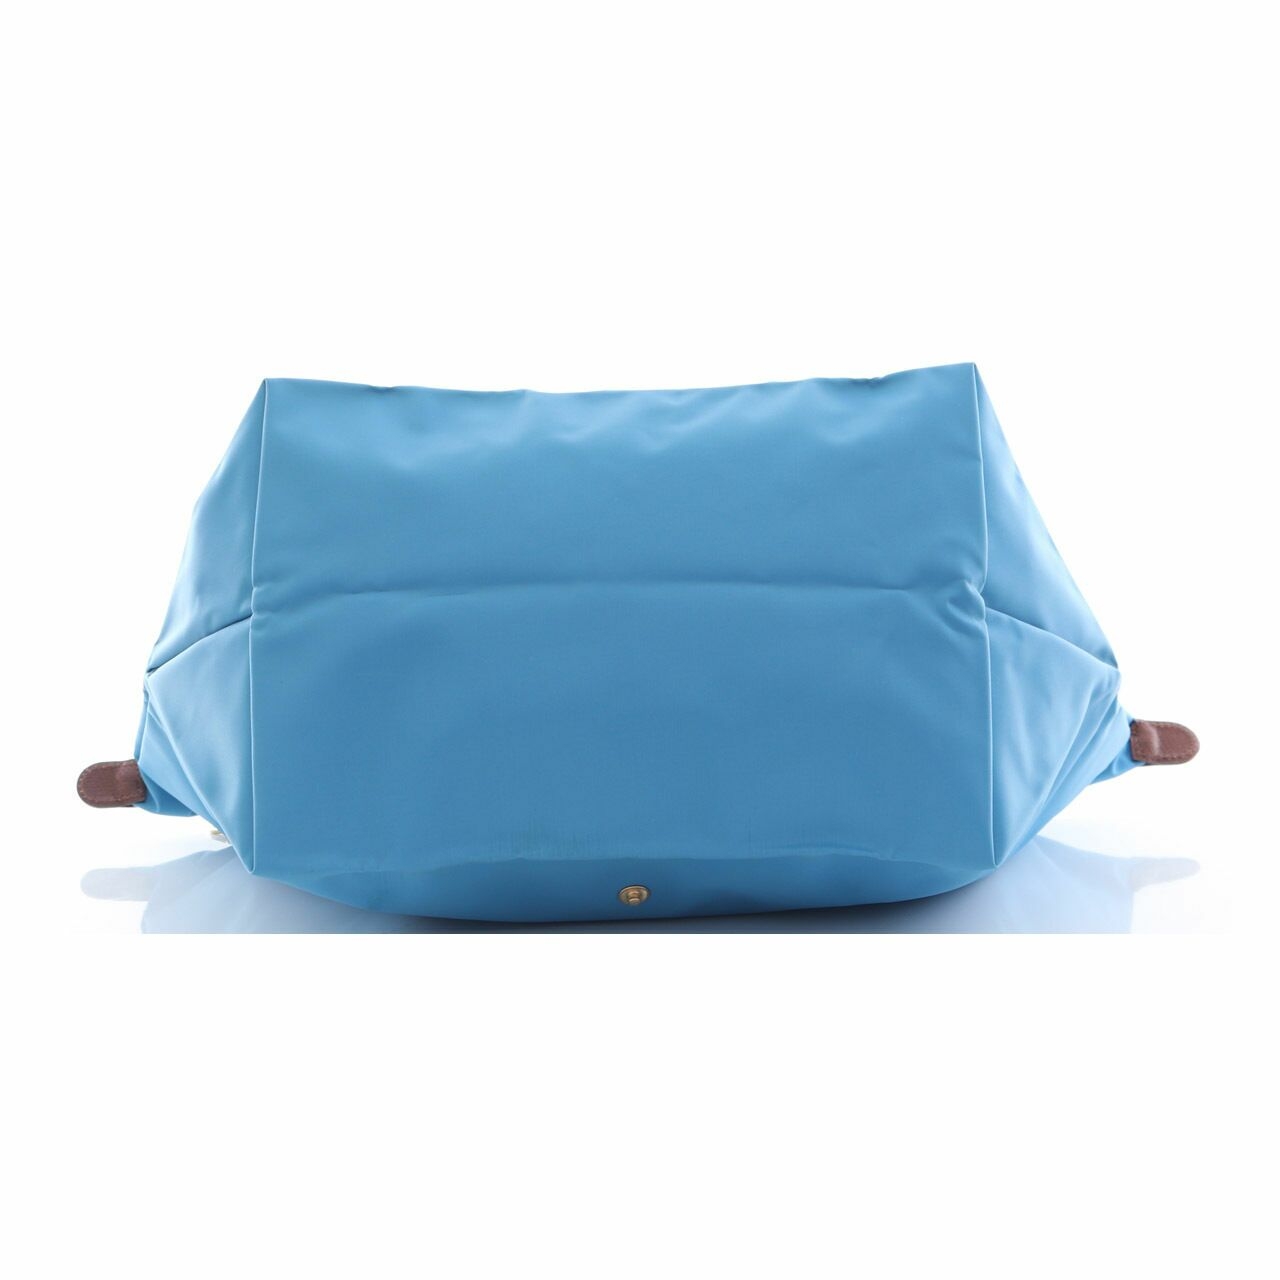 Longchamp Le Pliage Medium SH Cornflower Blue Handbag